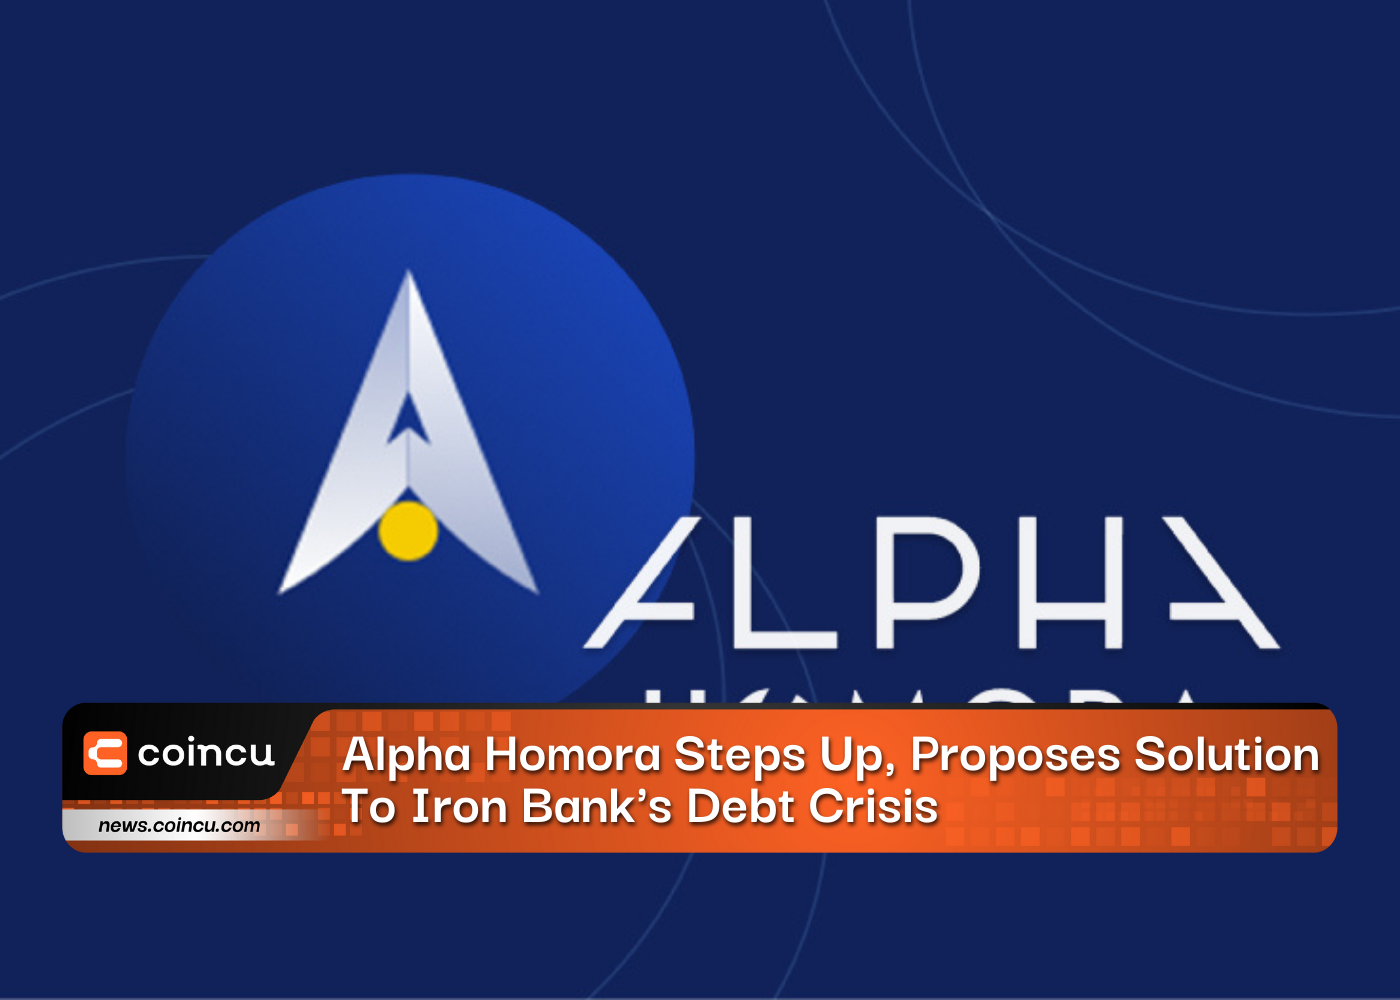 Alpha Homora intensifie ses propositions de solution